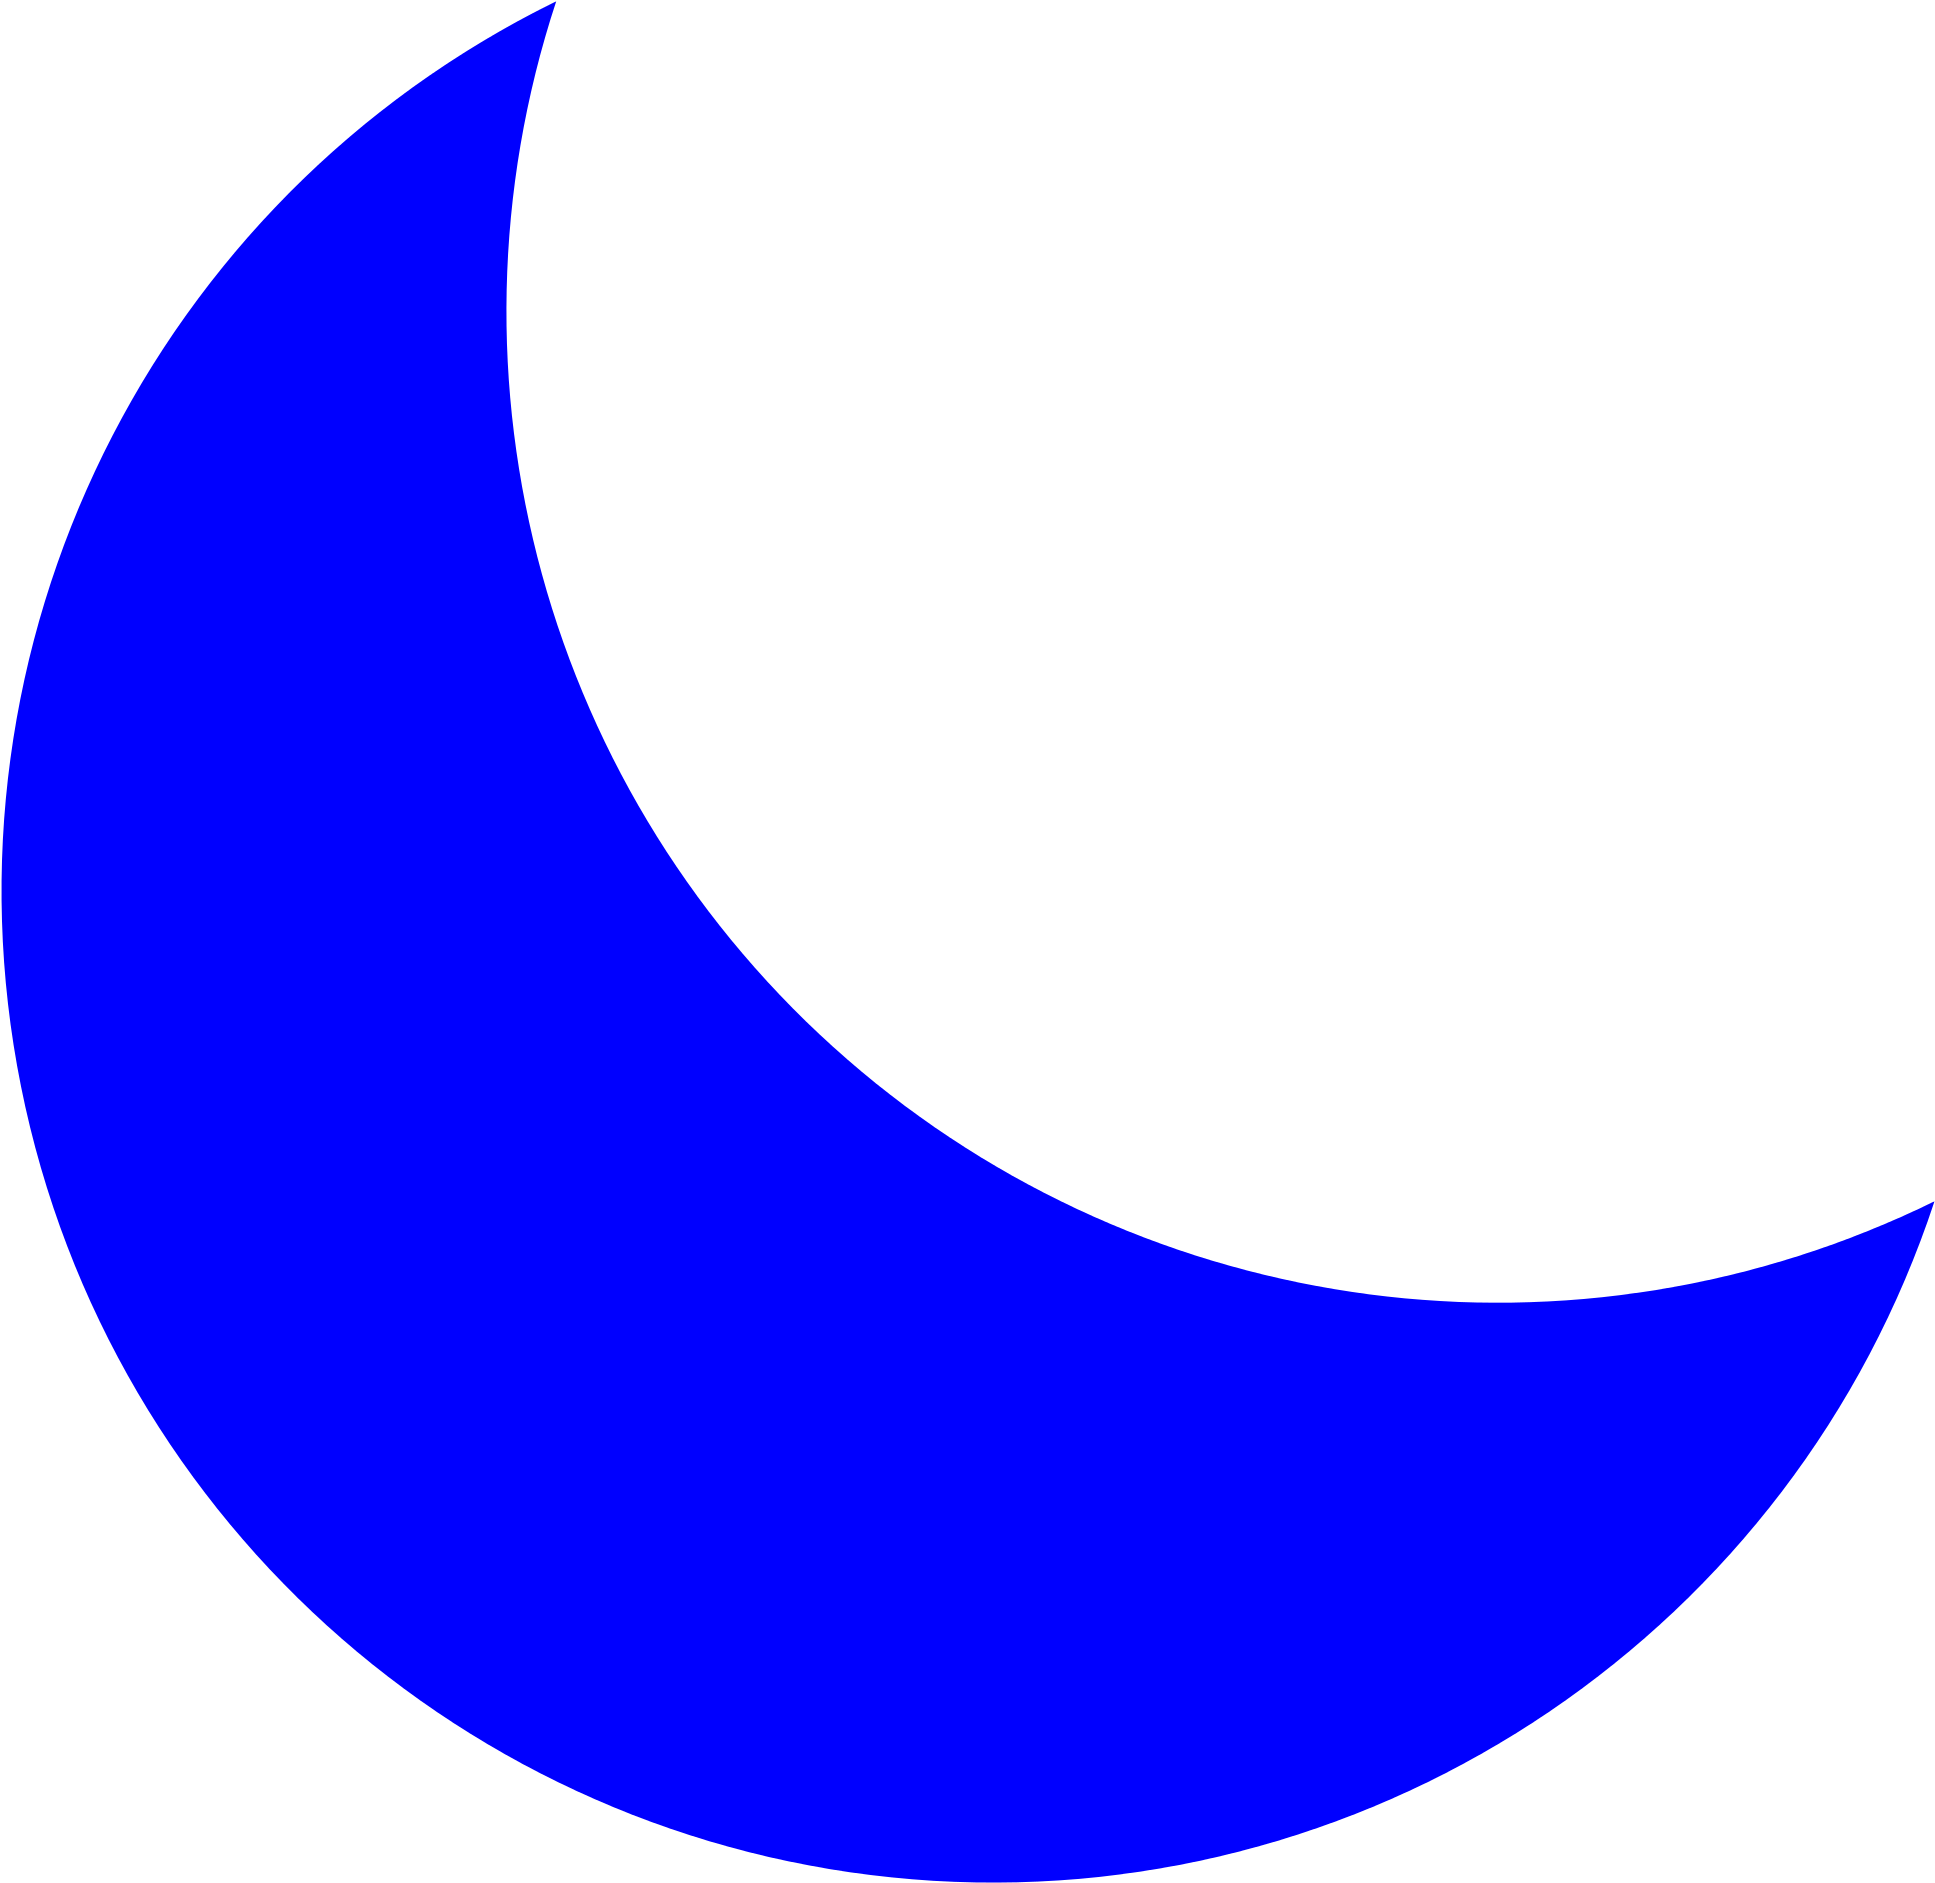 Moon shapes. Синий полумесяц. Синий месяц. Полумесяц фигура. Месяц на белом фоне.